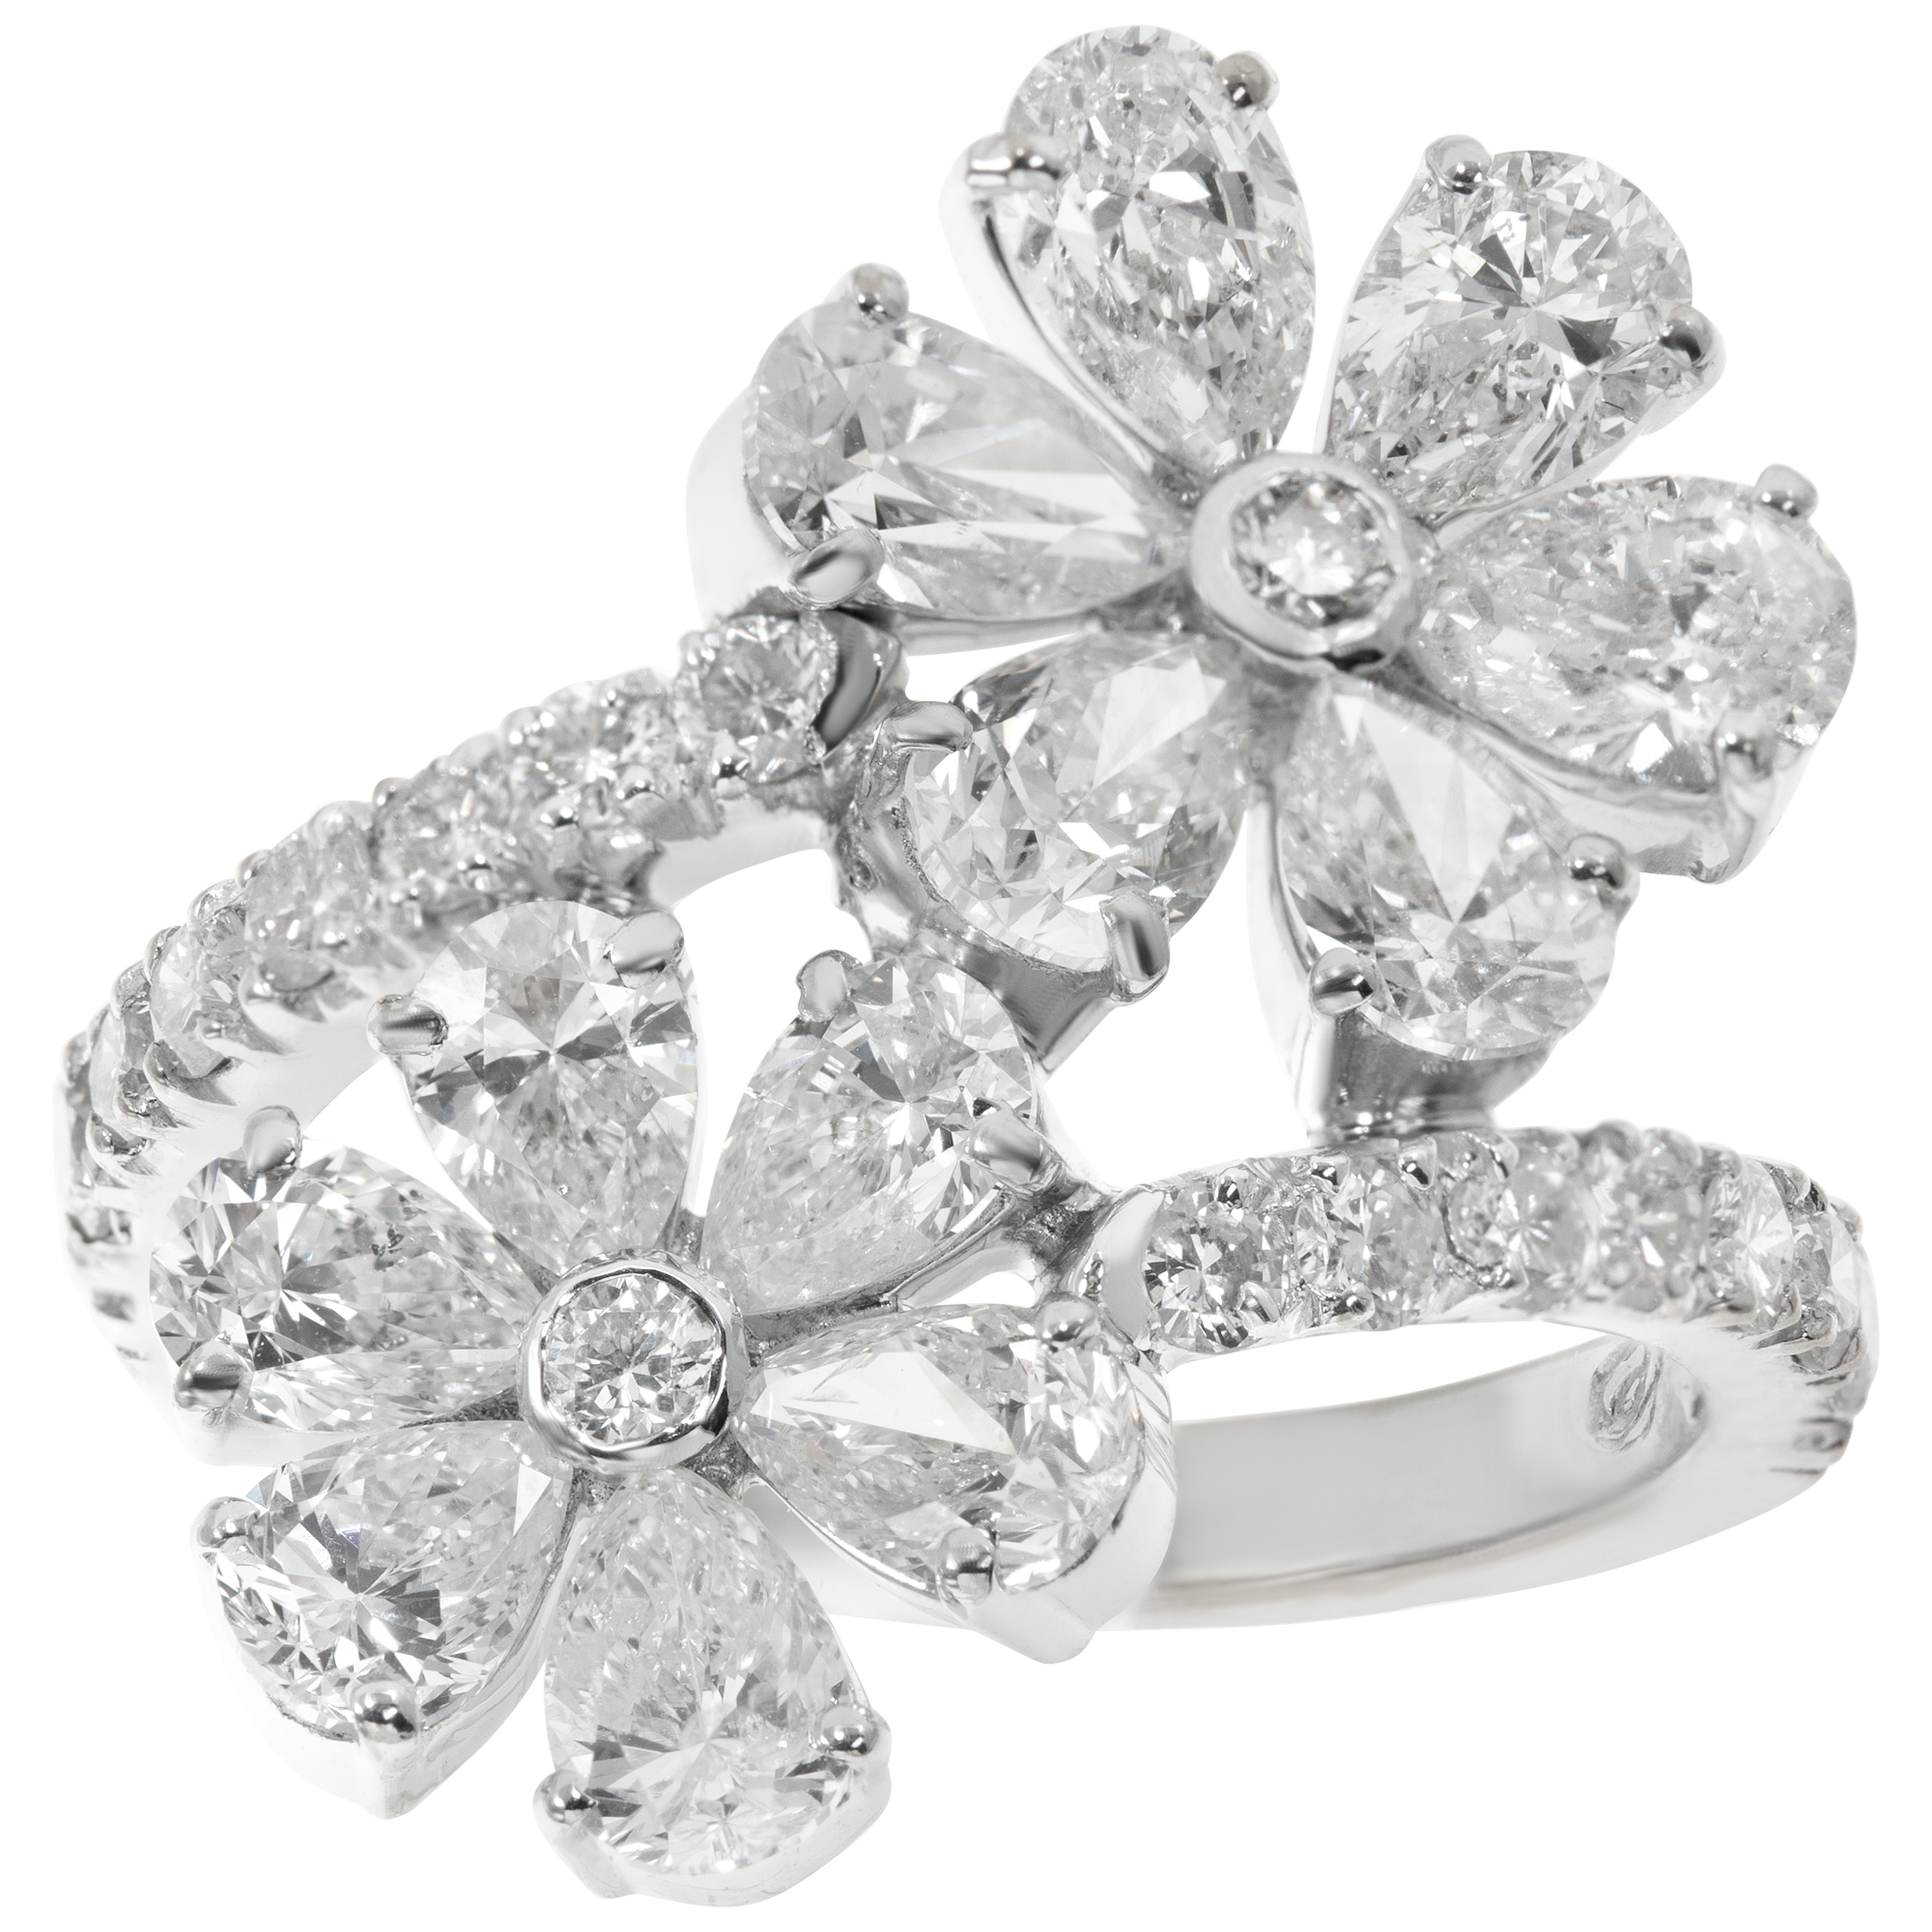 Pear & round brilliant cut diamonds flower ring in 18k white gold. 3.67 carats diamonds.